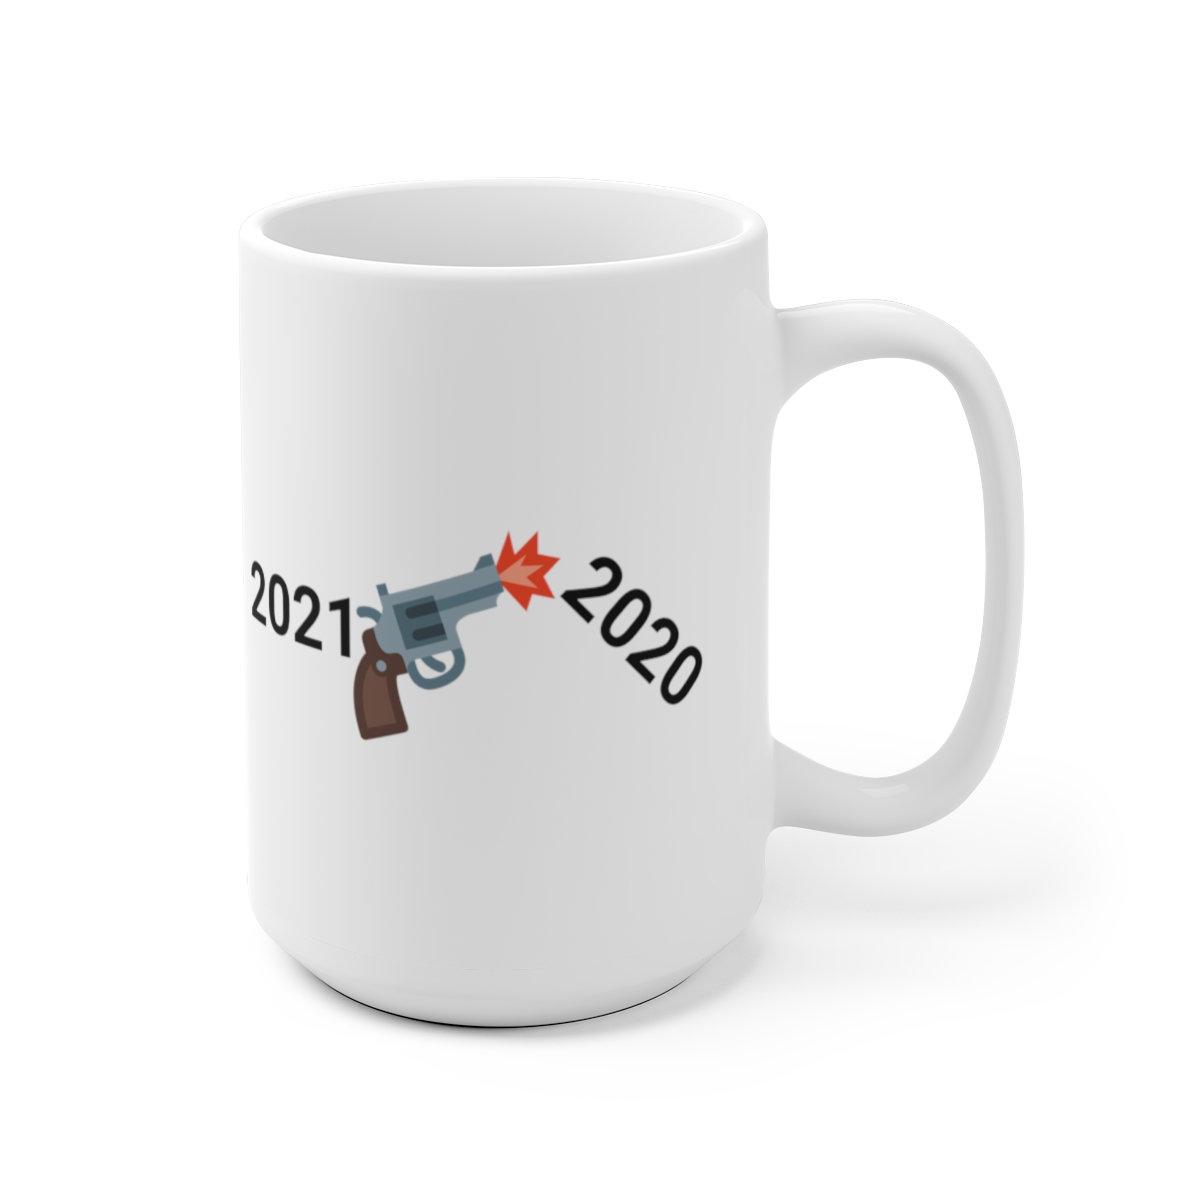 Excited to share the latest addition to my #etsy shop: 2021 Coffee Mug - 15 oz White Mug etsy.me/3aXeehm #yes #ceramic #drinkware #housewares #mugs #coffeemug #ceramicmug #fathergift #birthdaygift